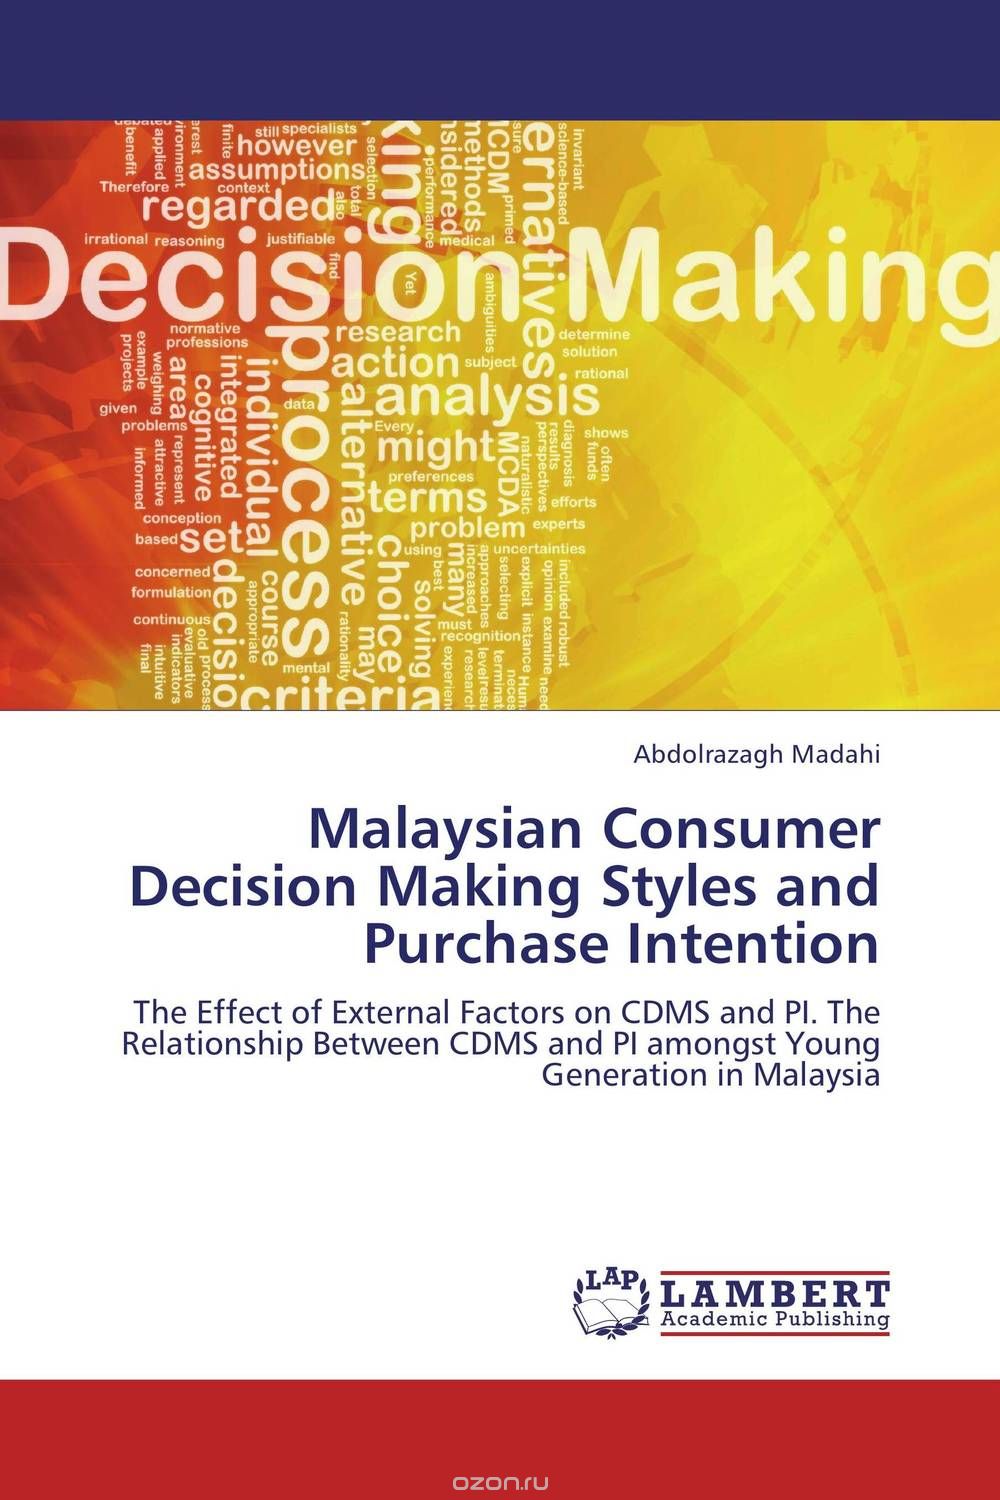 Скачать книгу "Malaysian Consumer Decision Making Styles and Purchase Intention"